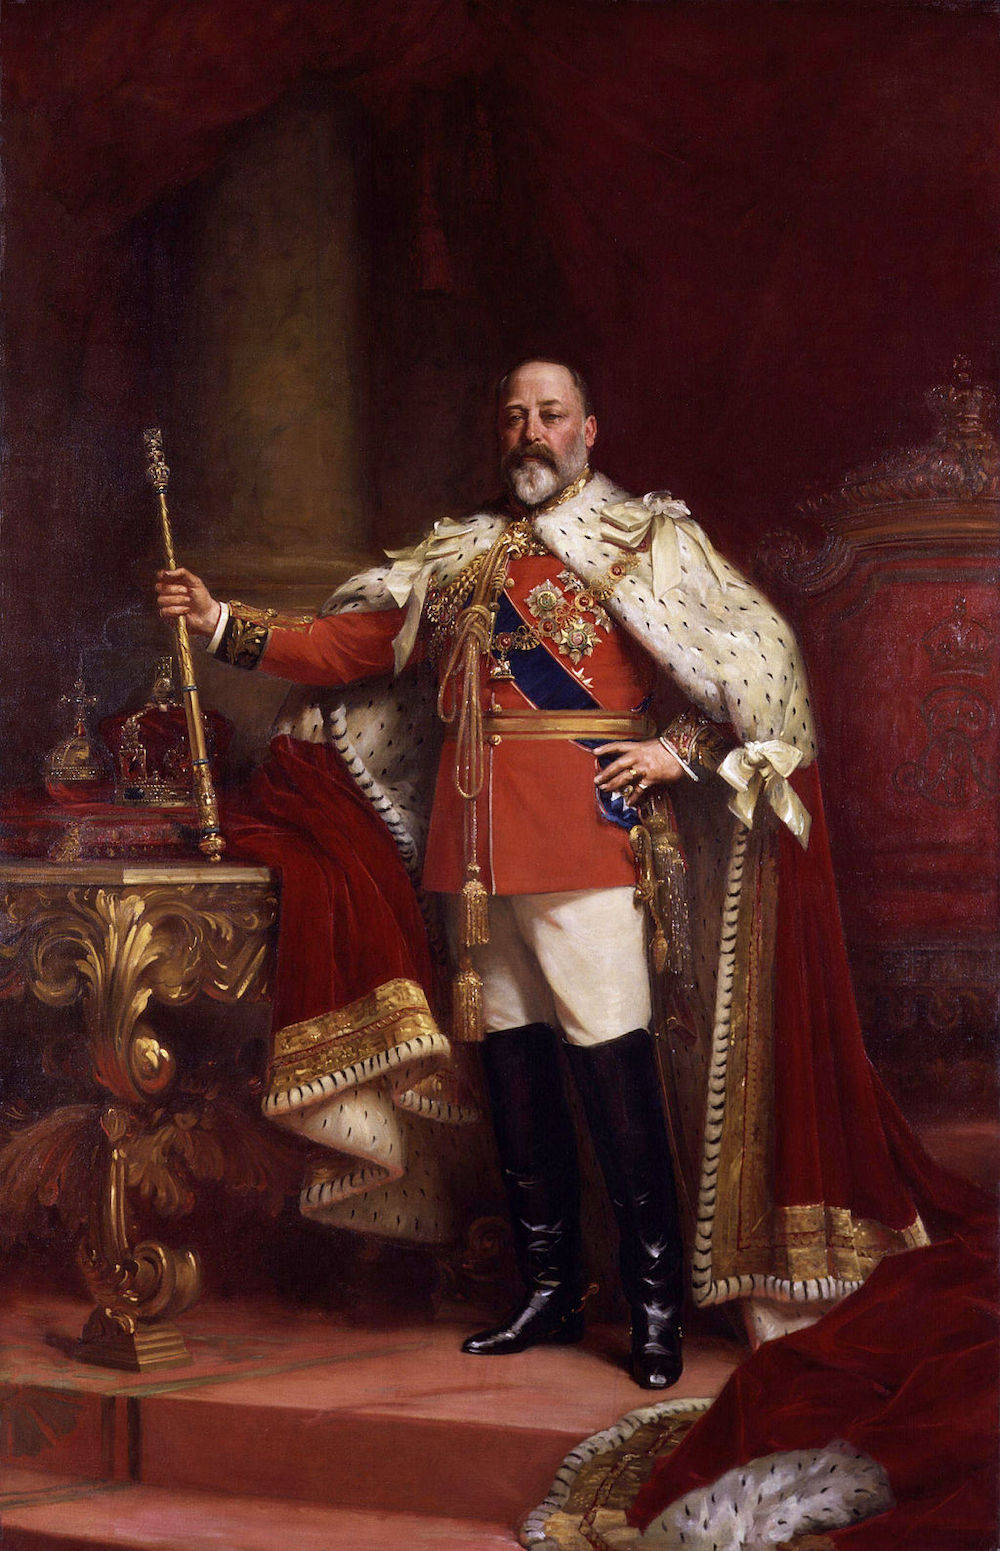 Queen Monarchs: King Edward VII by Sir (Samuel) Luke Fildes. Photo Credit: © Public Domain via Wikimedia Commons.